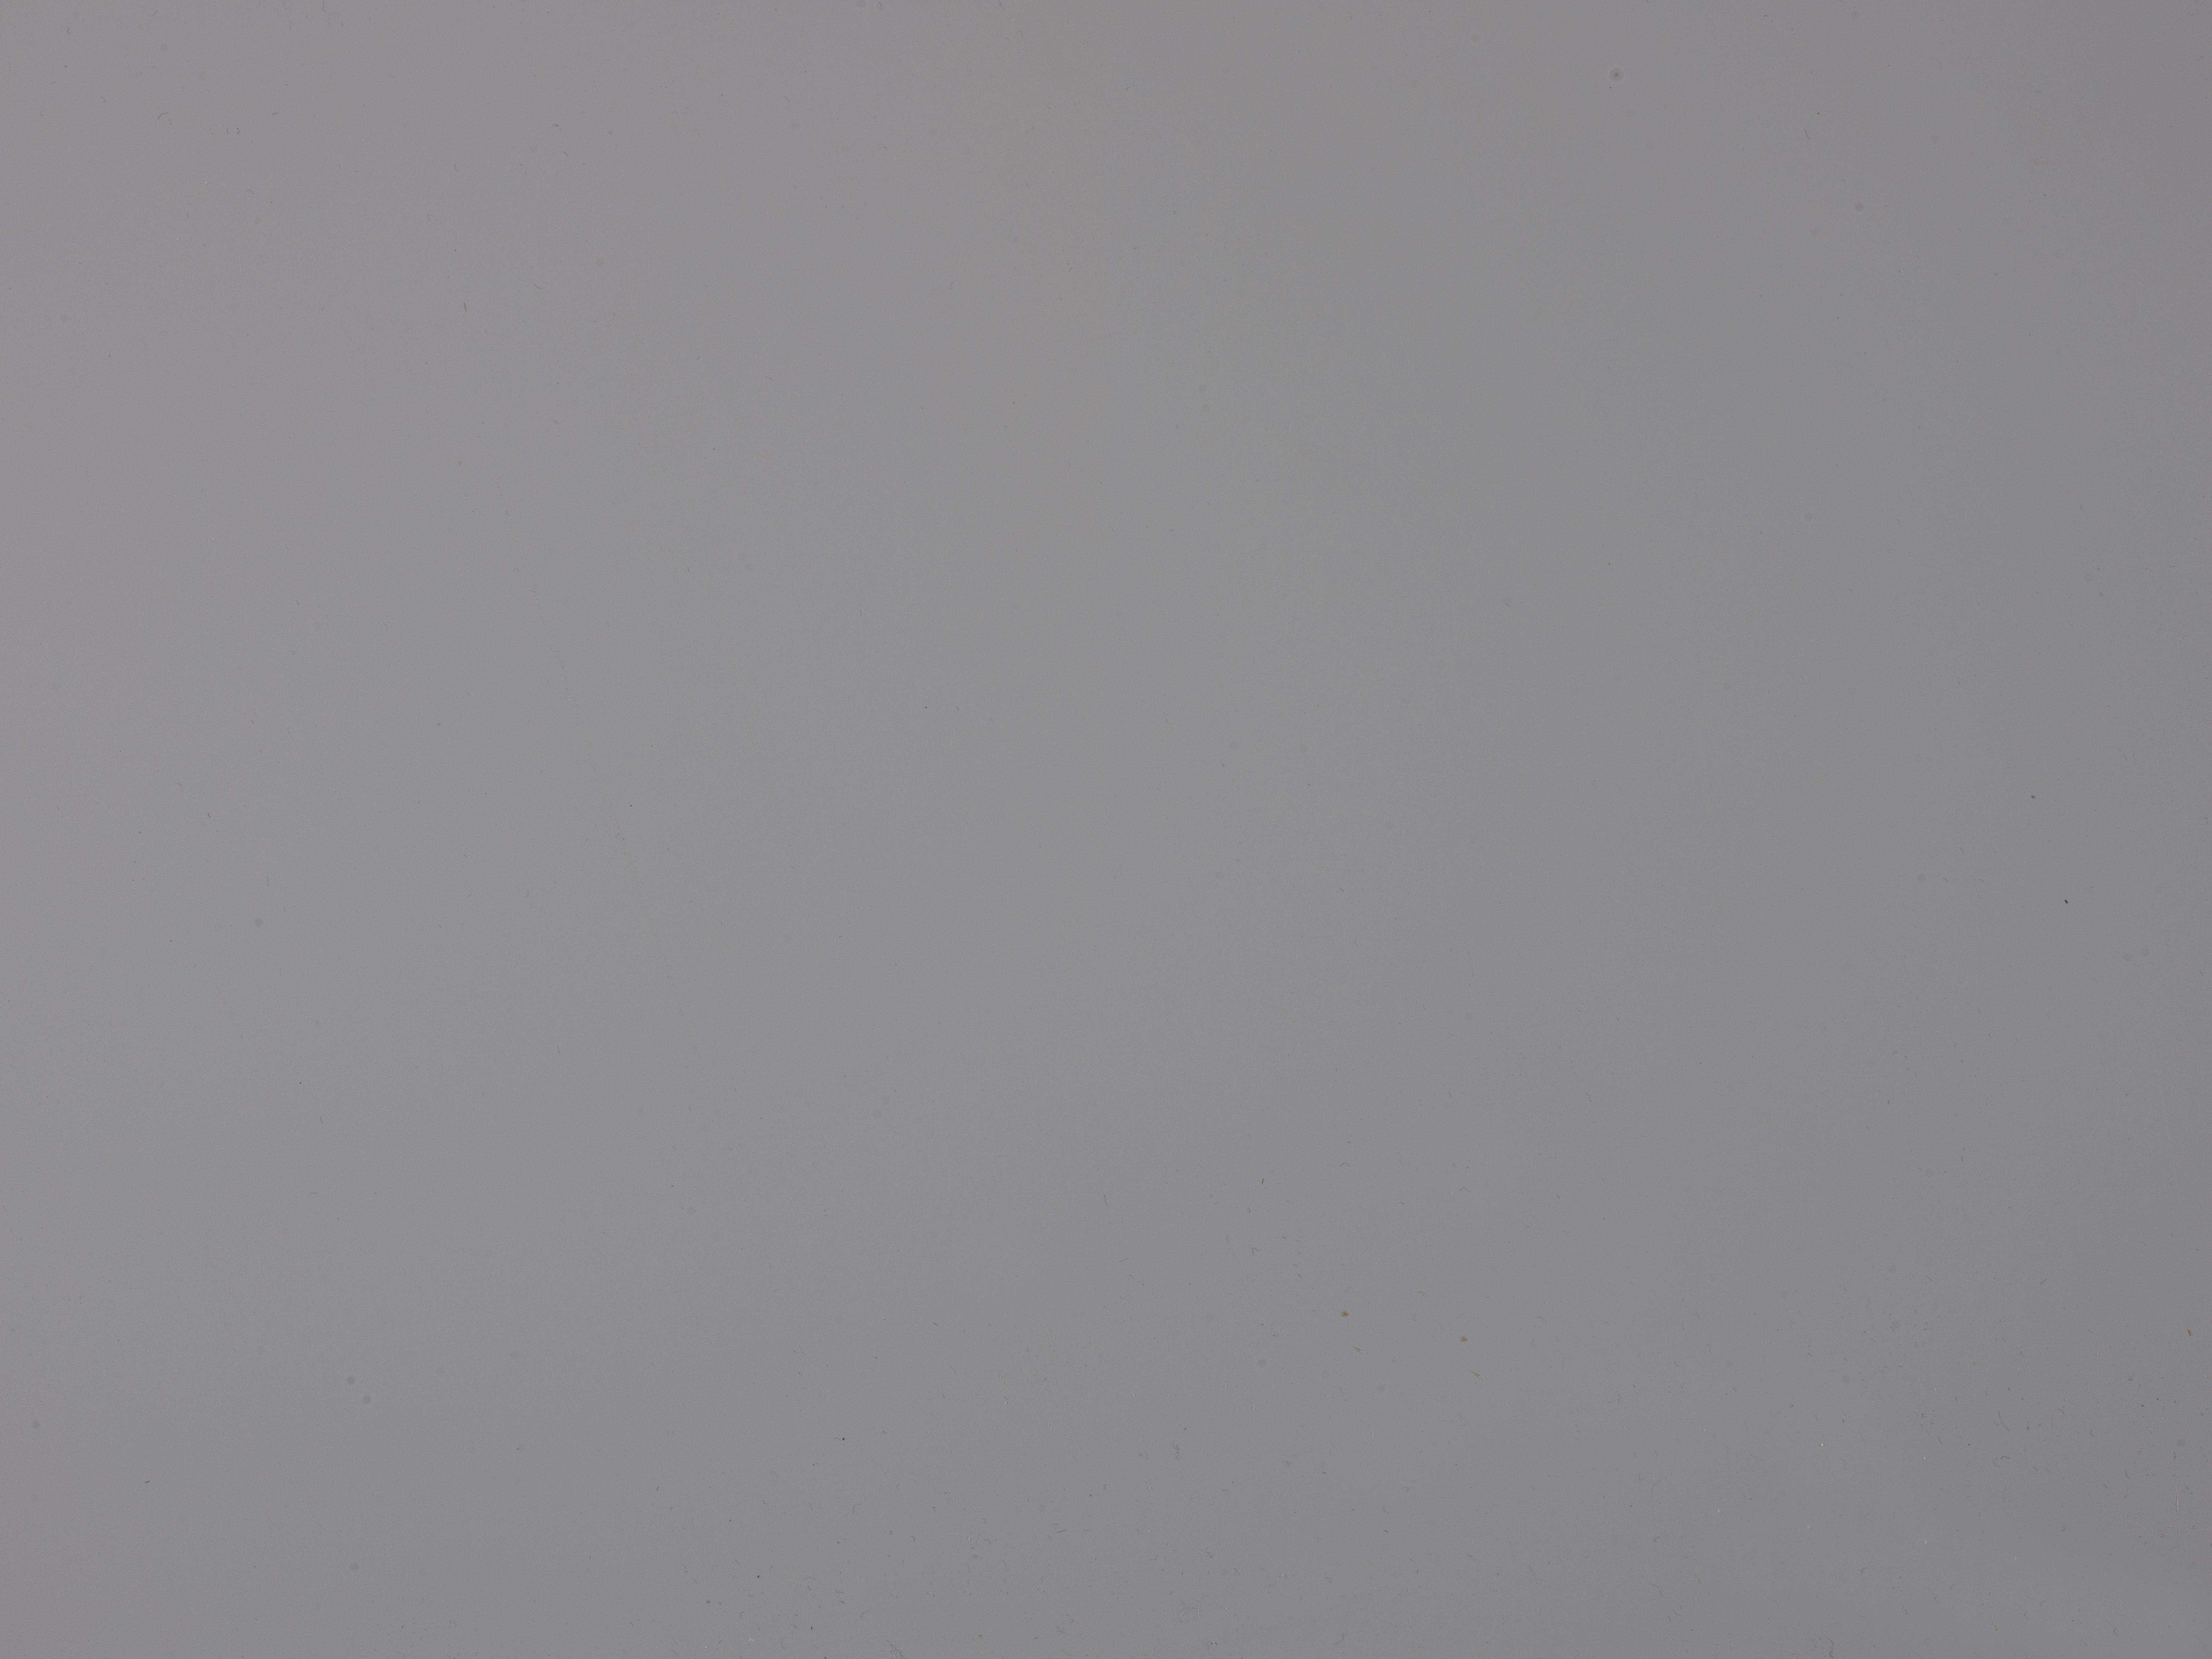 Vysokotlaký laminát Fénix  Arpa - HPLF FENIX 0767 NTM – dekor BEIGE COLOSTRAI - JH jádro hnědé 